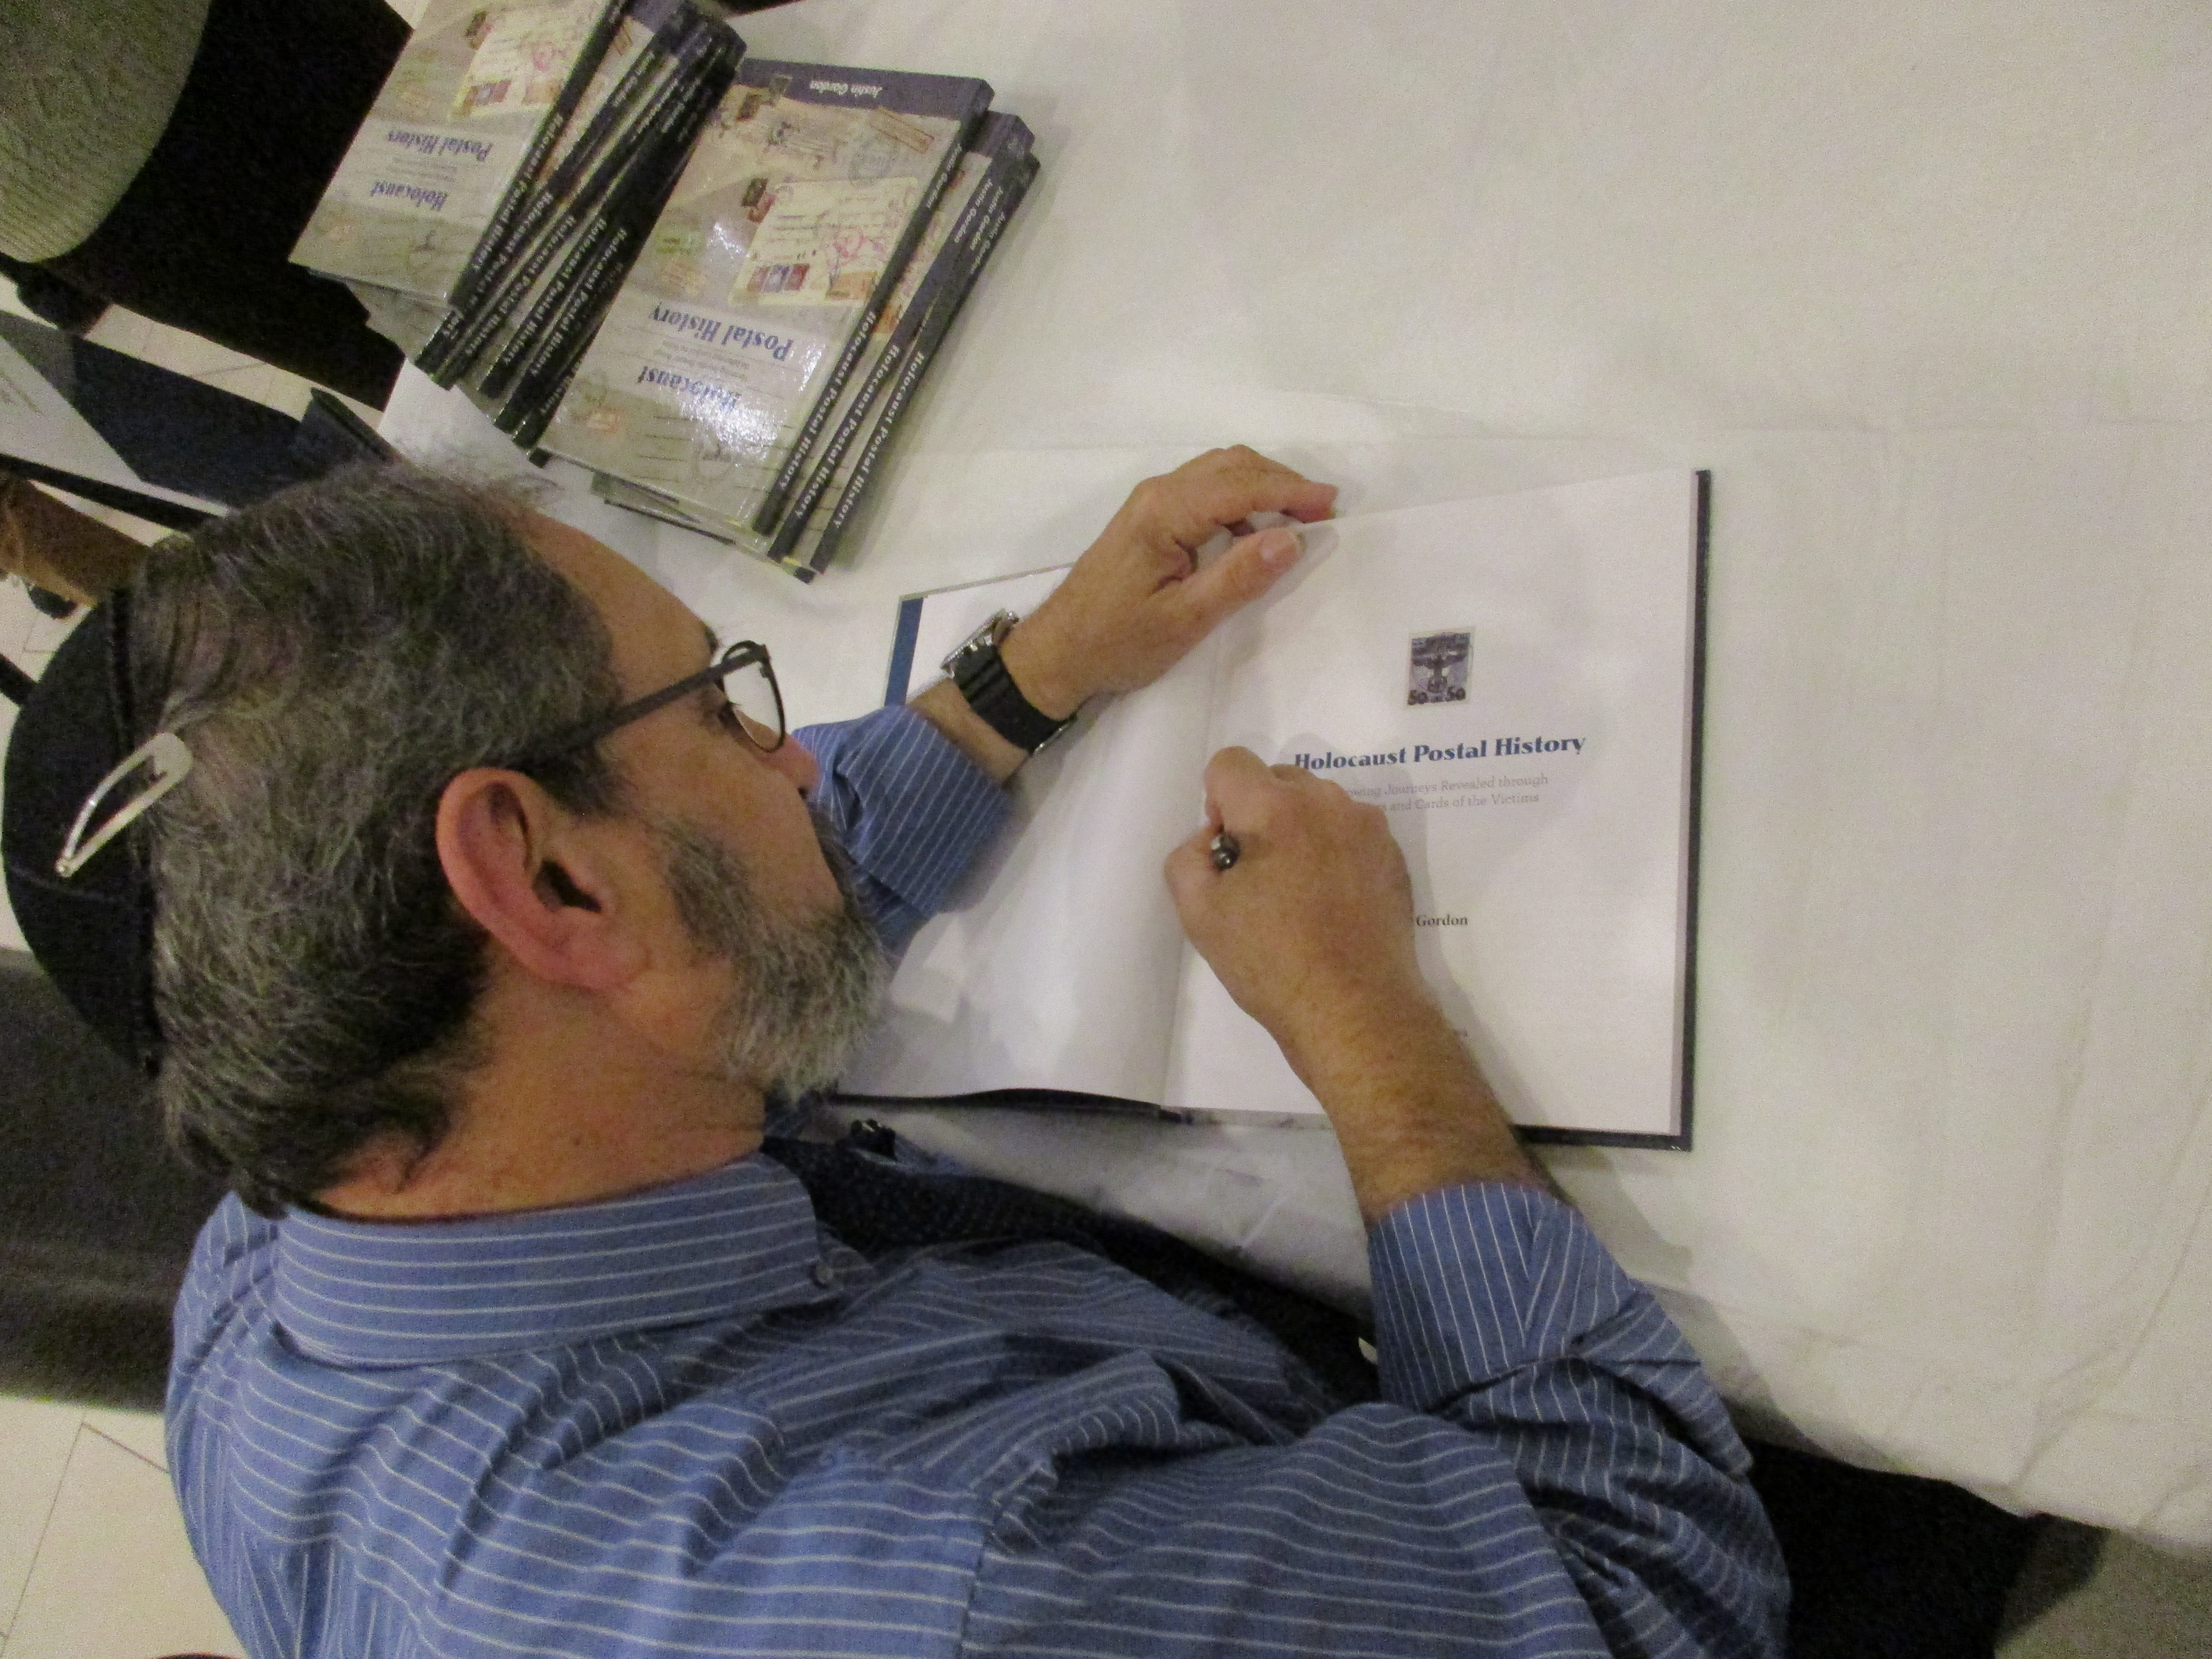 Author Justin Gordon signs a copy of Holocaust Postal History.